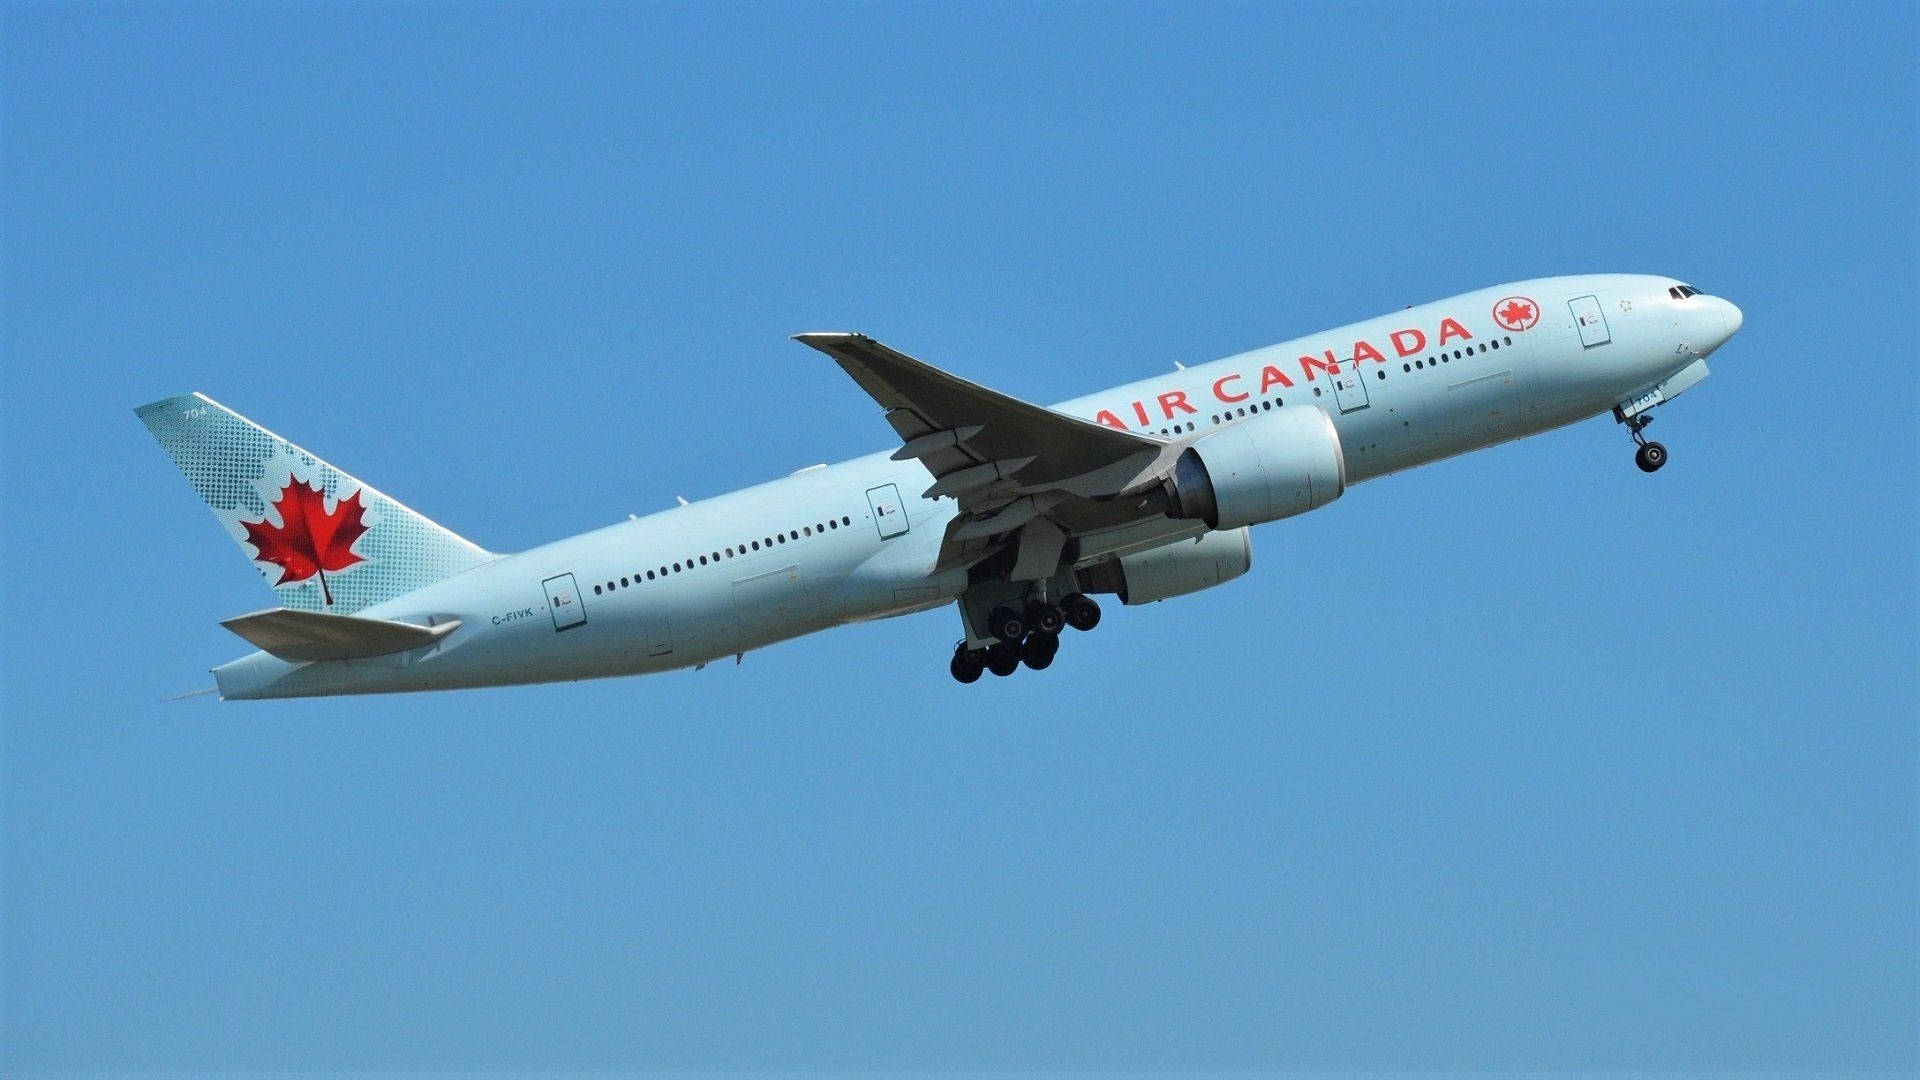 Air Canada Airship In The Blue Sky Wallpaper